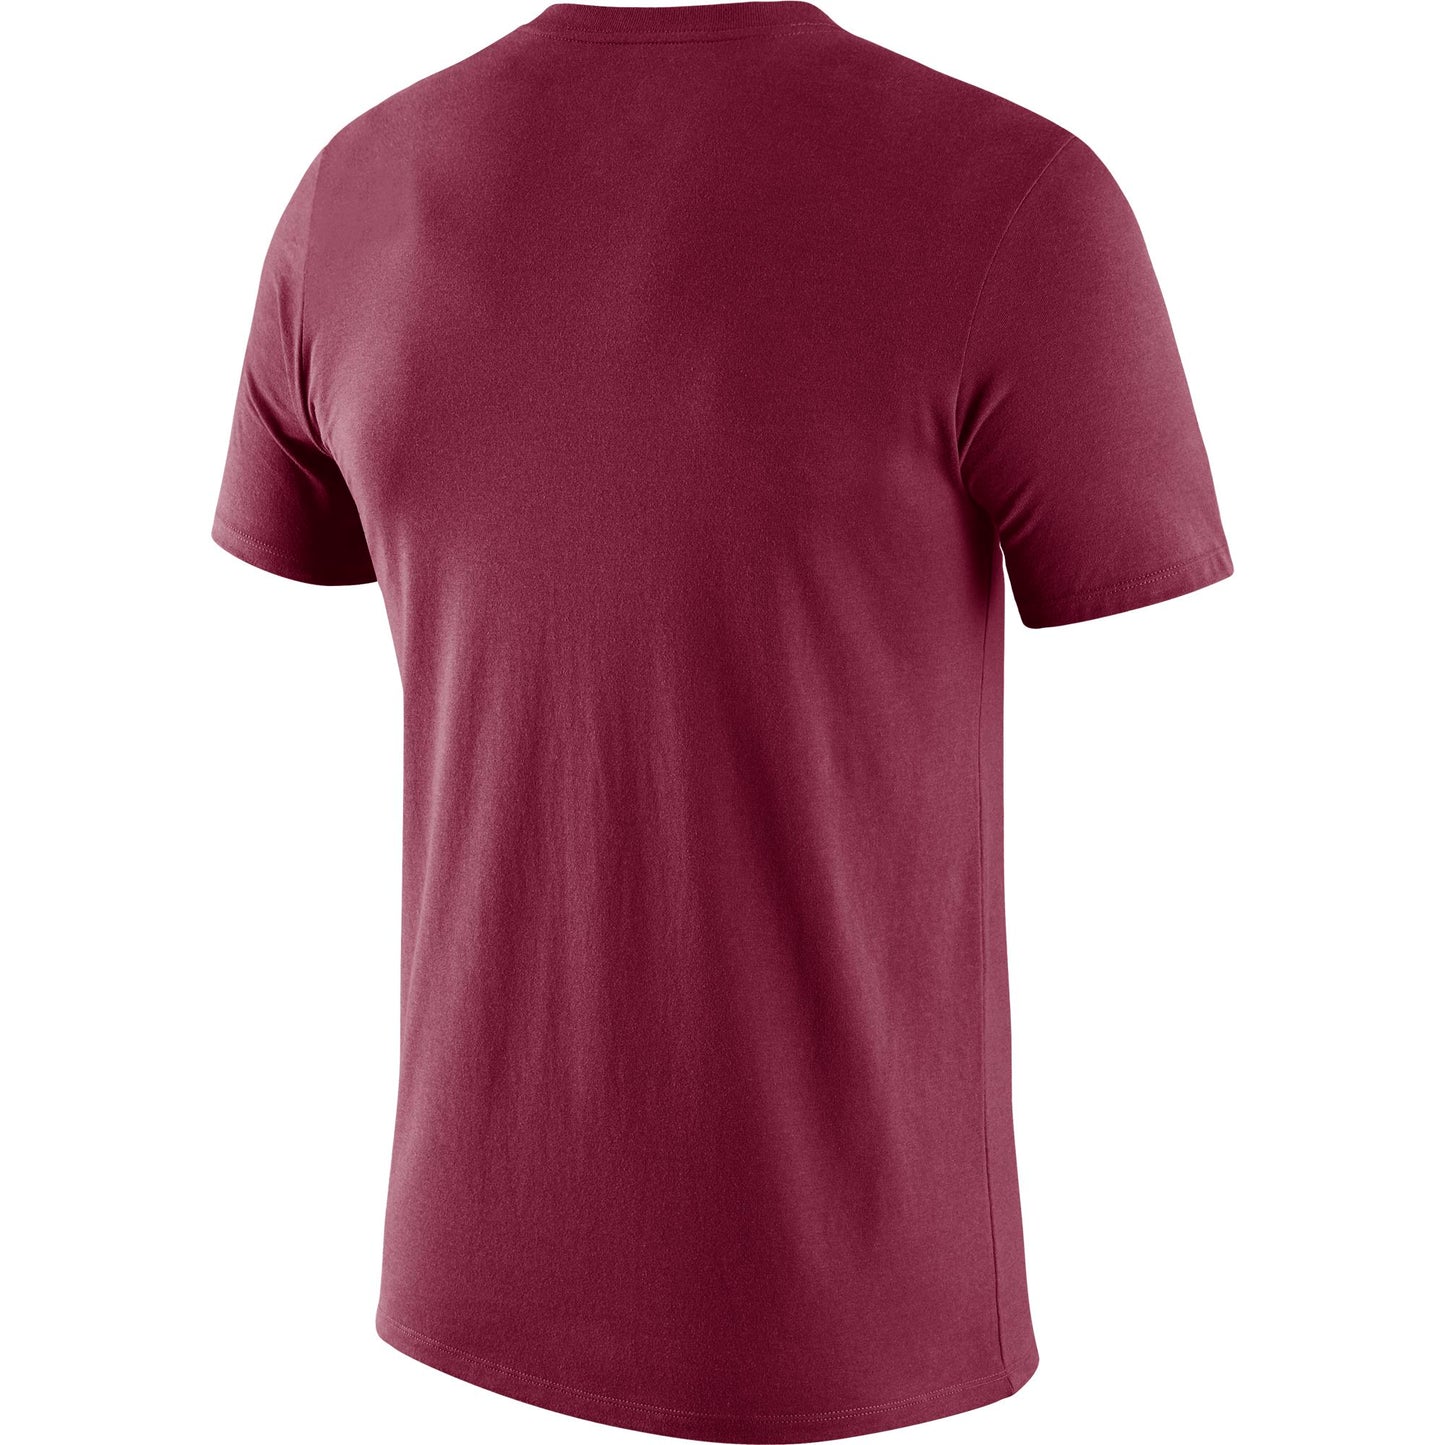 Florida State Seminoles Nike Essential Wordmark T-Shirt – Maroon